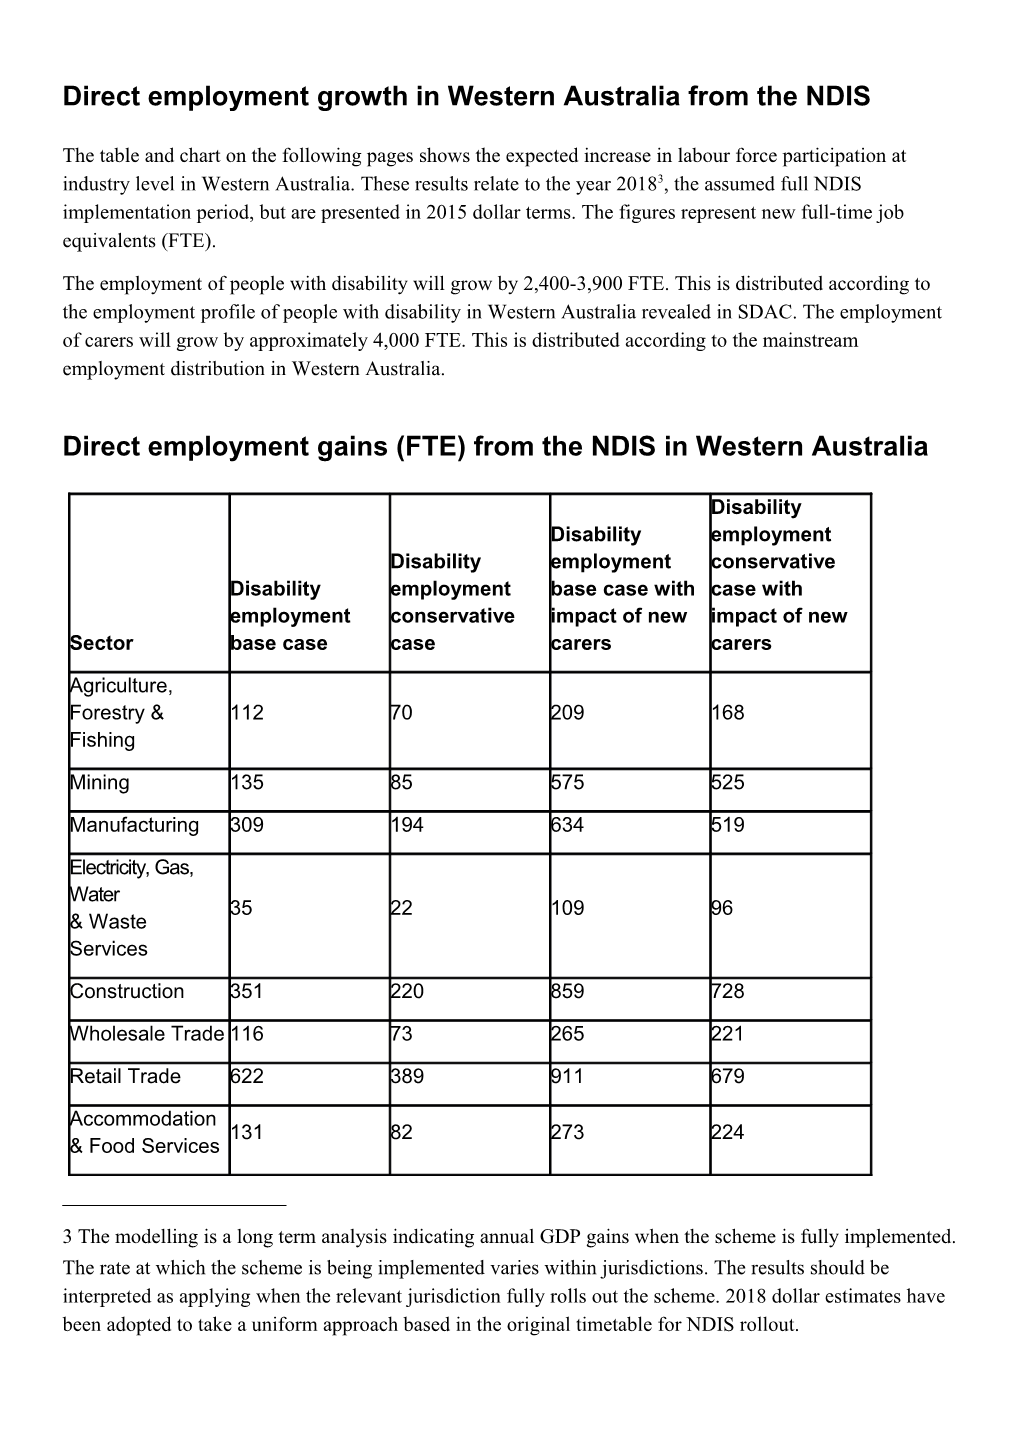 Economic Benefits of the NDIS in Western Australia